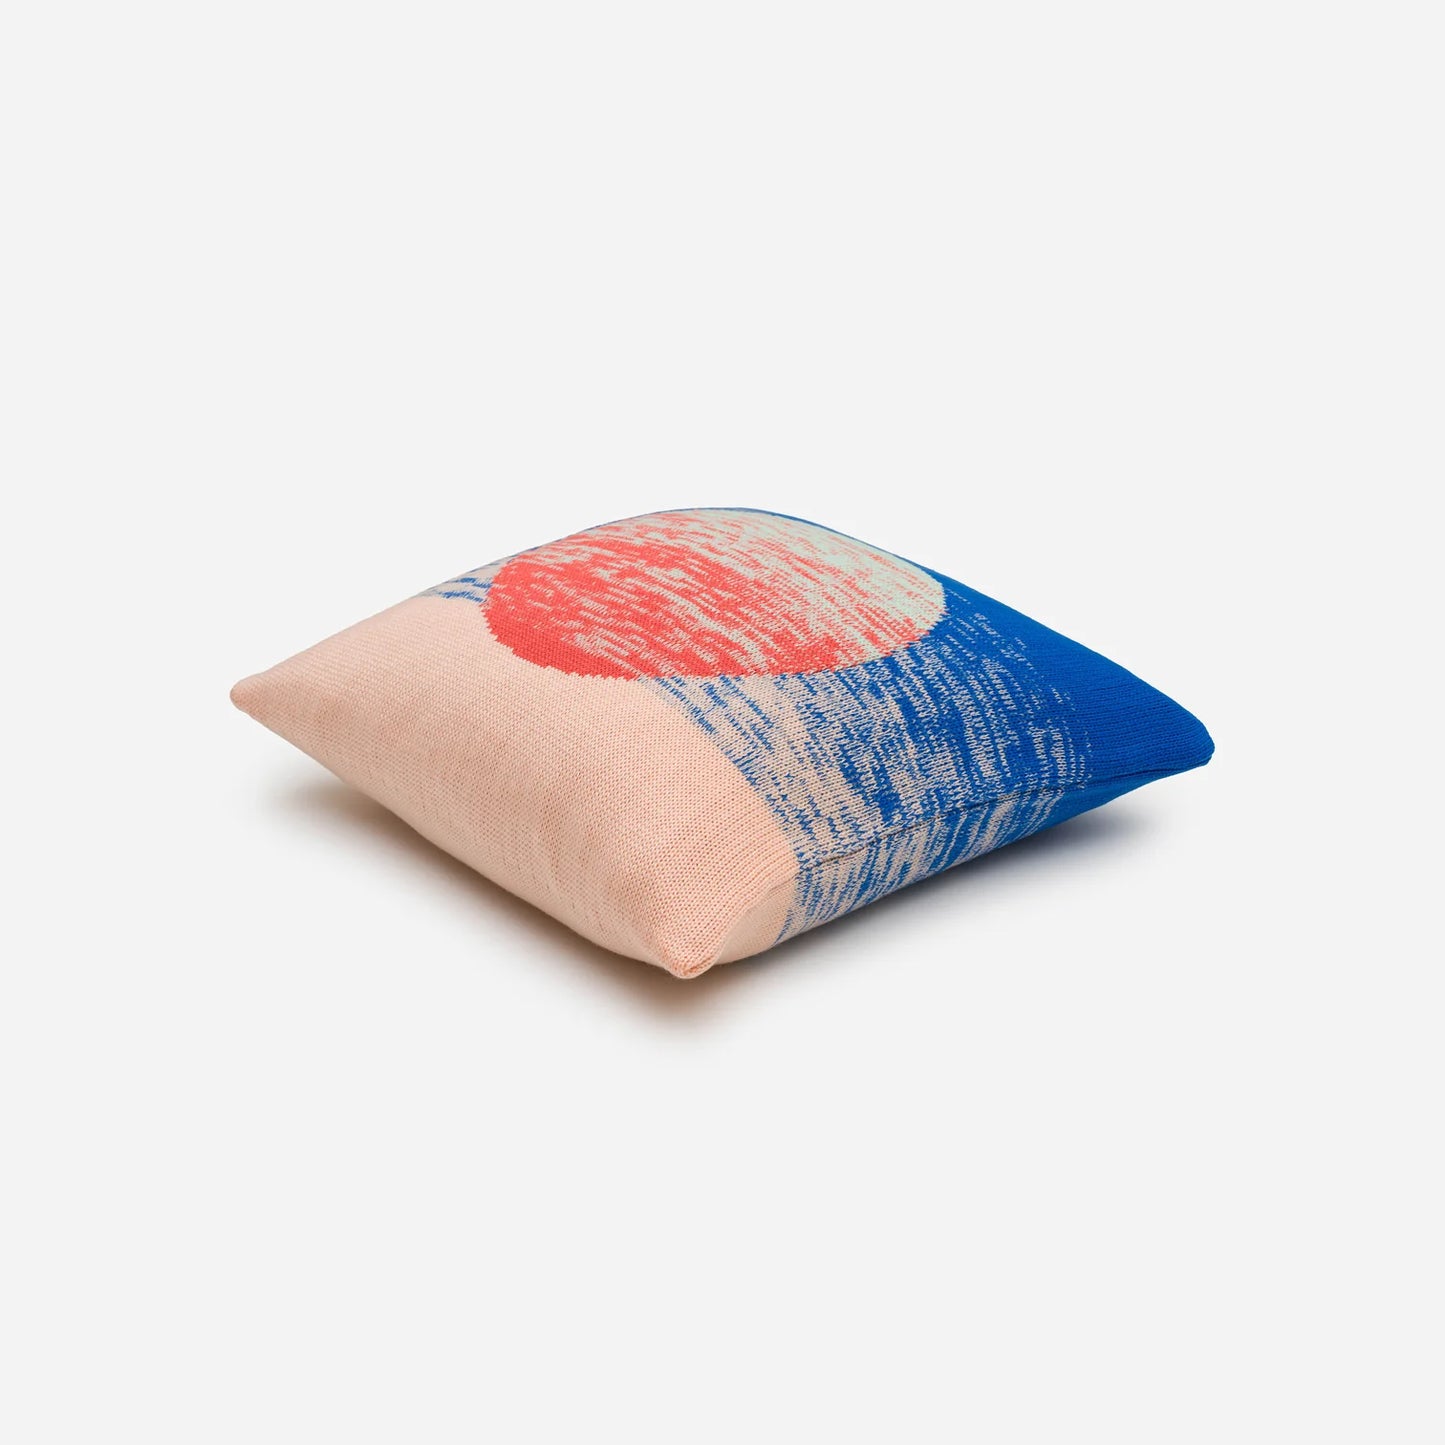 Cobalt Melon Sunrise Sunset Pillow Cover